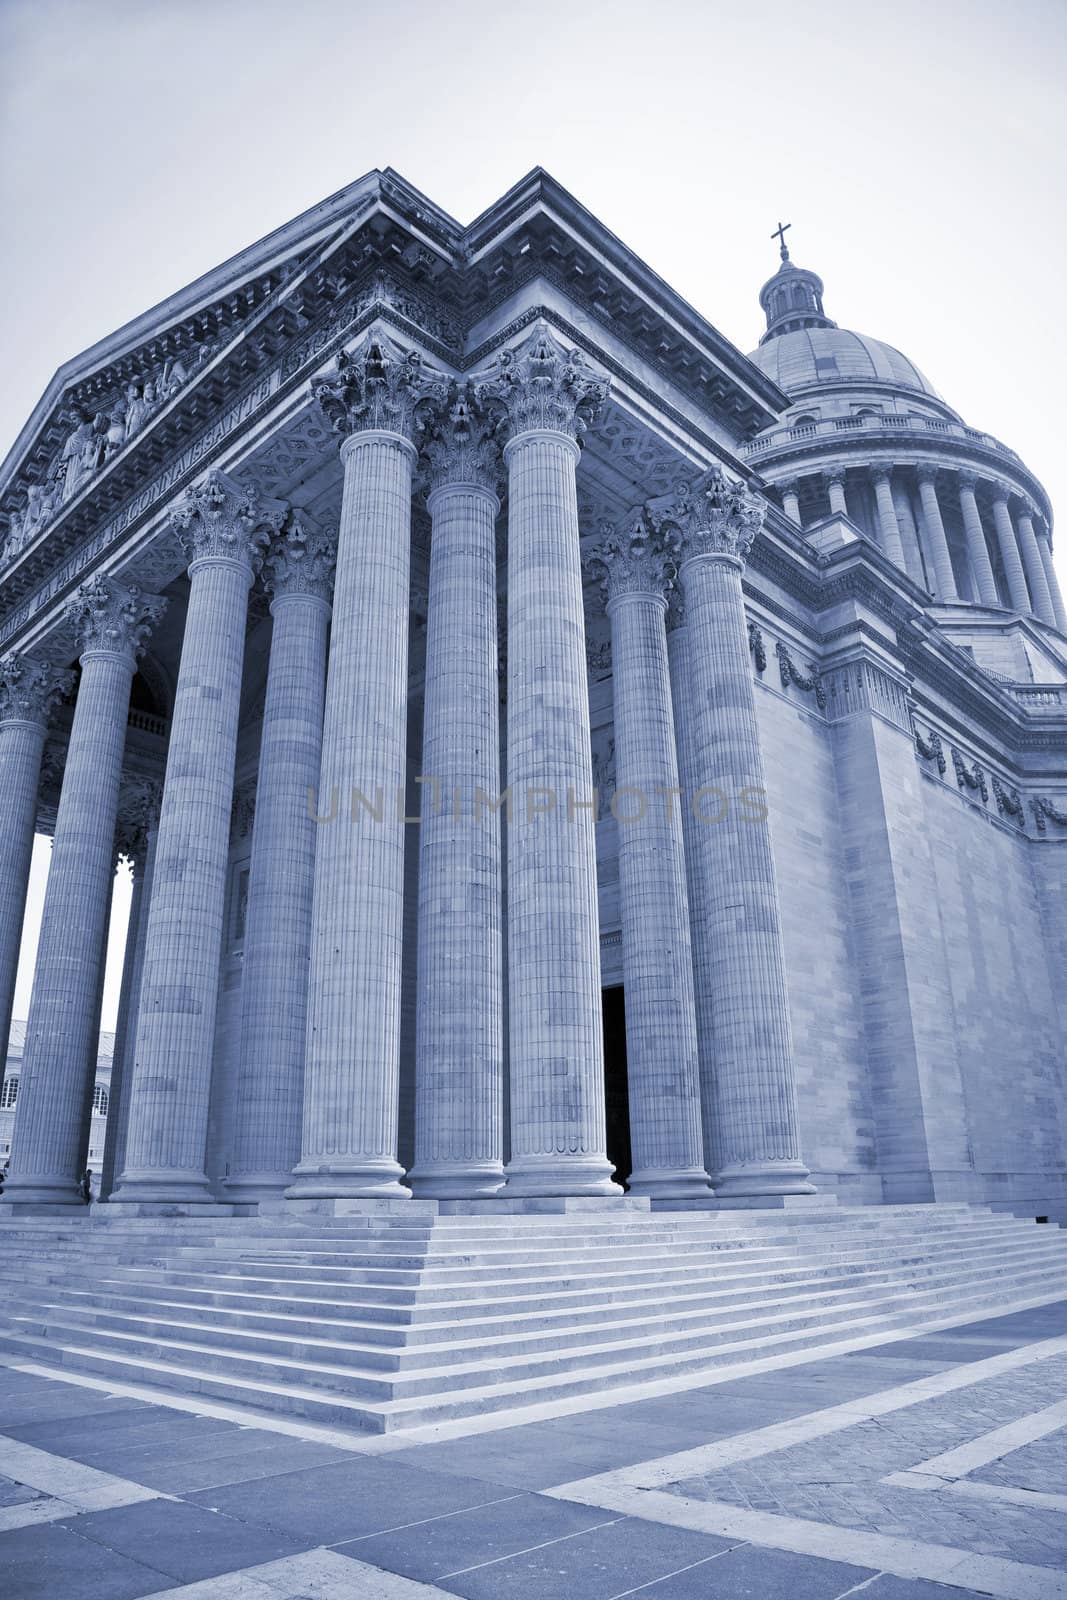 Pantheon - Paris, France by ABCDK